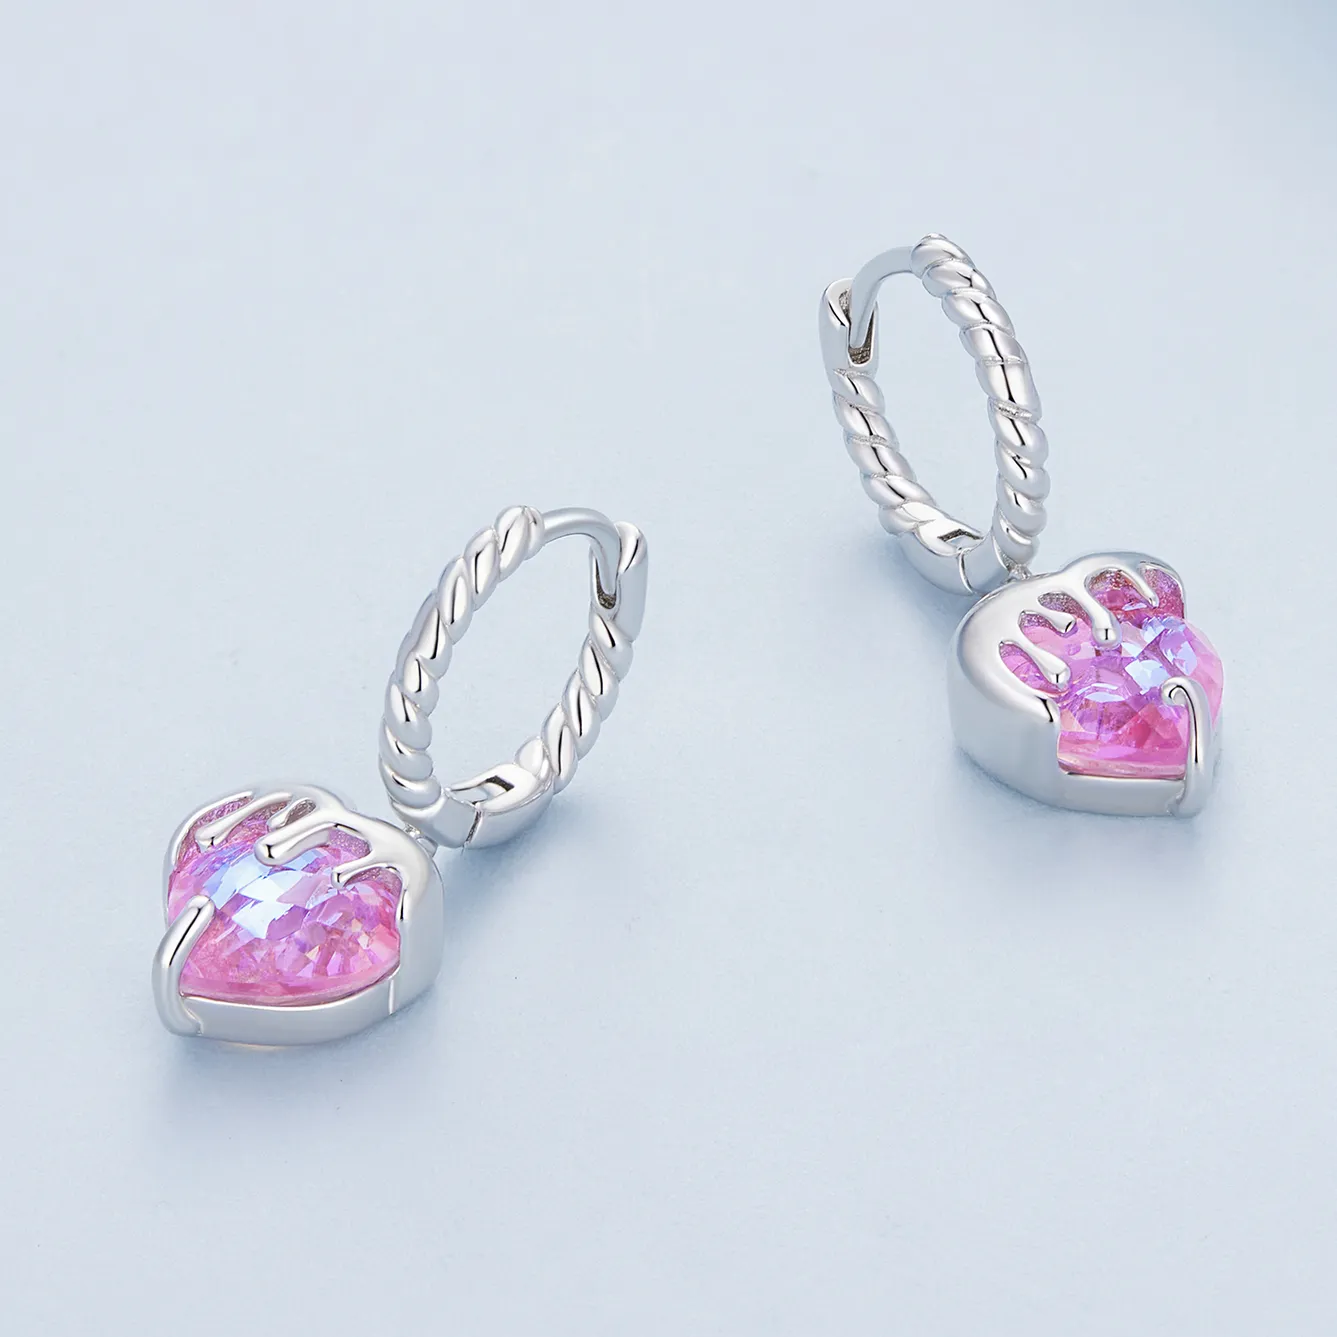 Pandora Style Melting Heart Hoop Earrings - BSE833